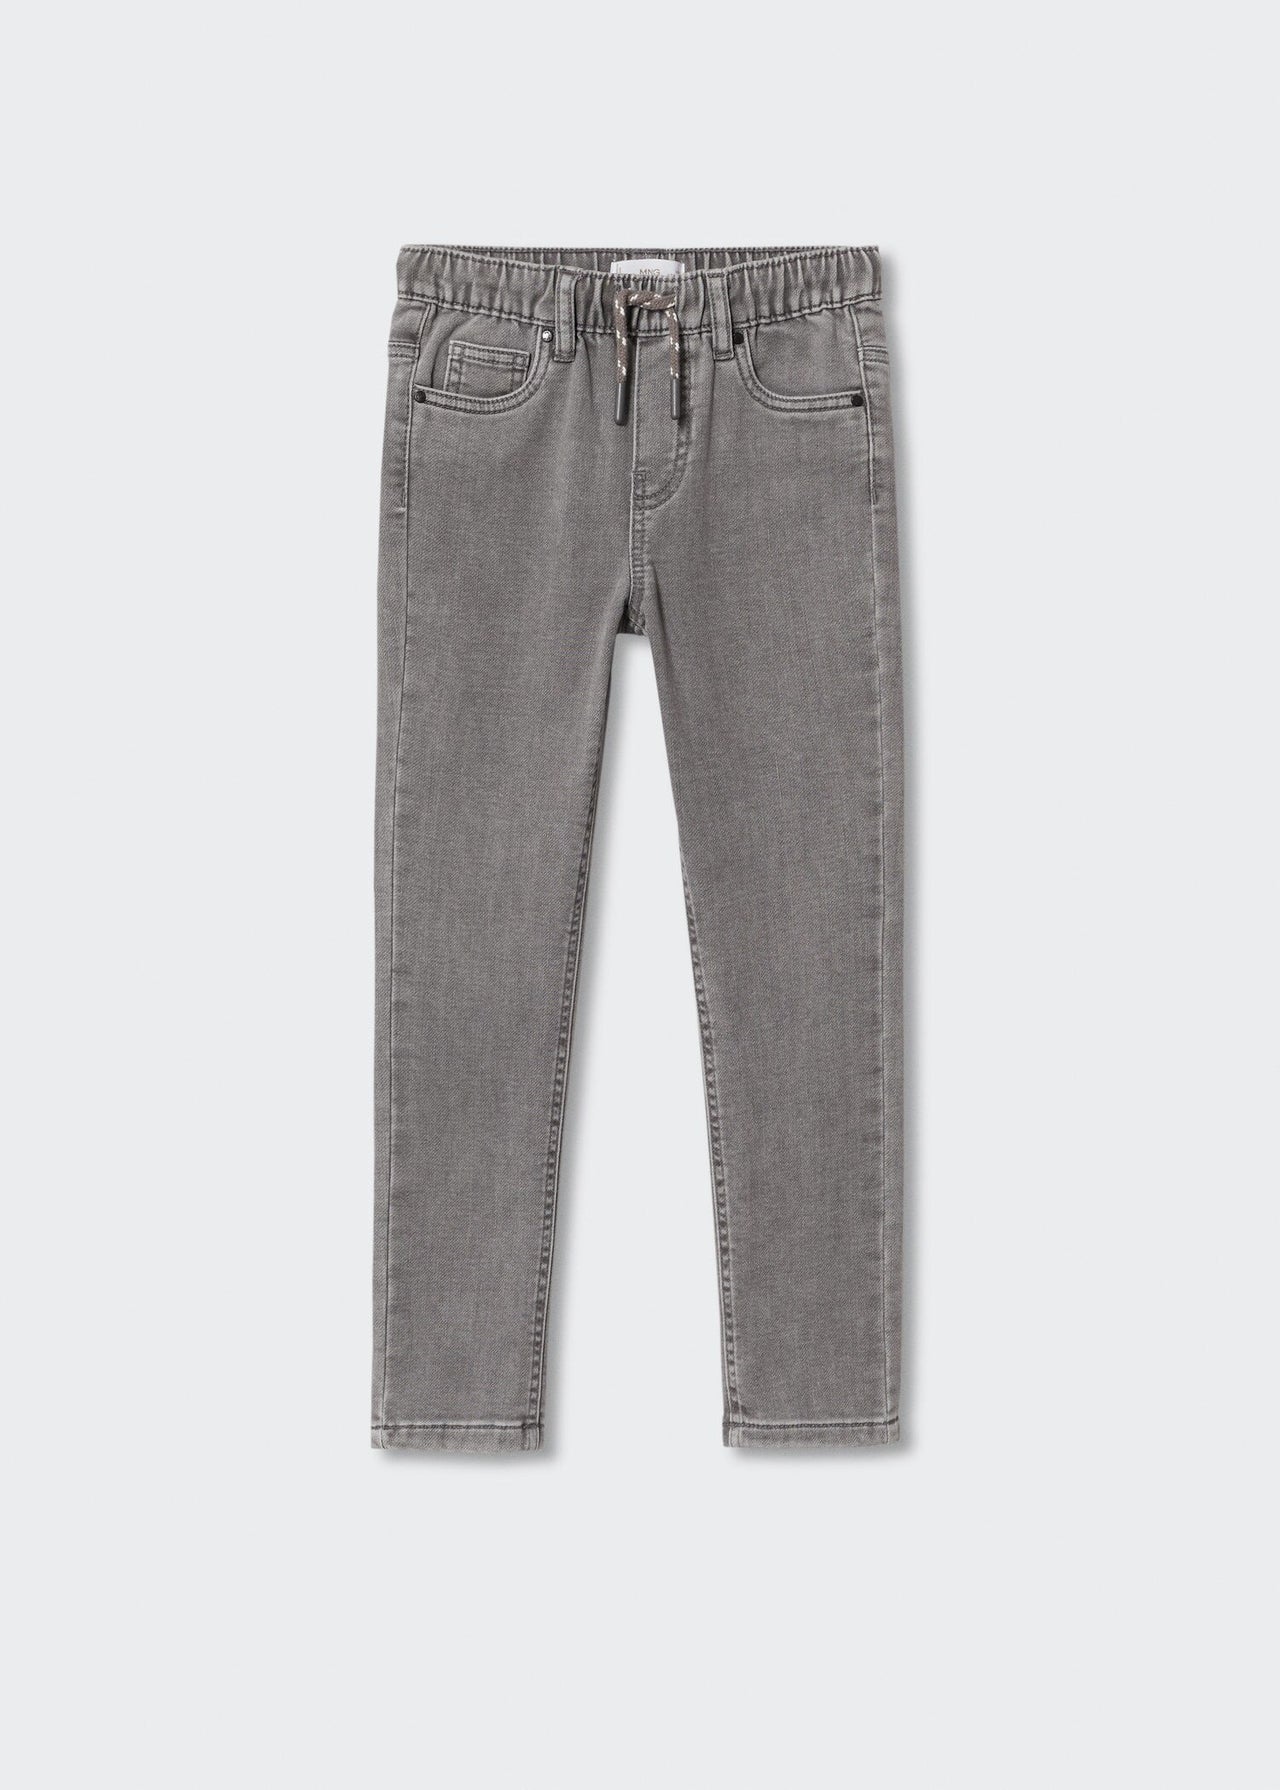 Lace drawstring waist jeans